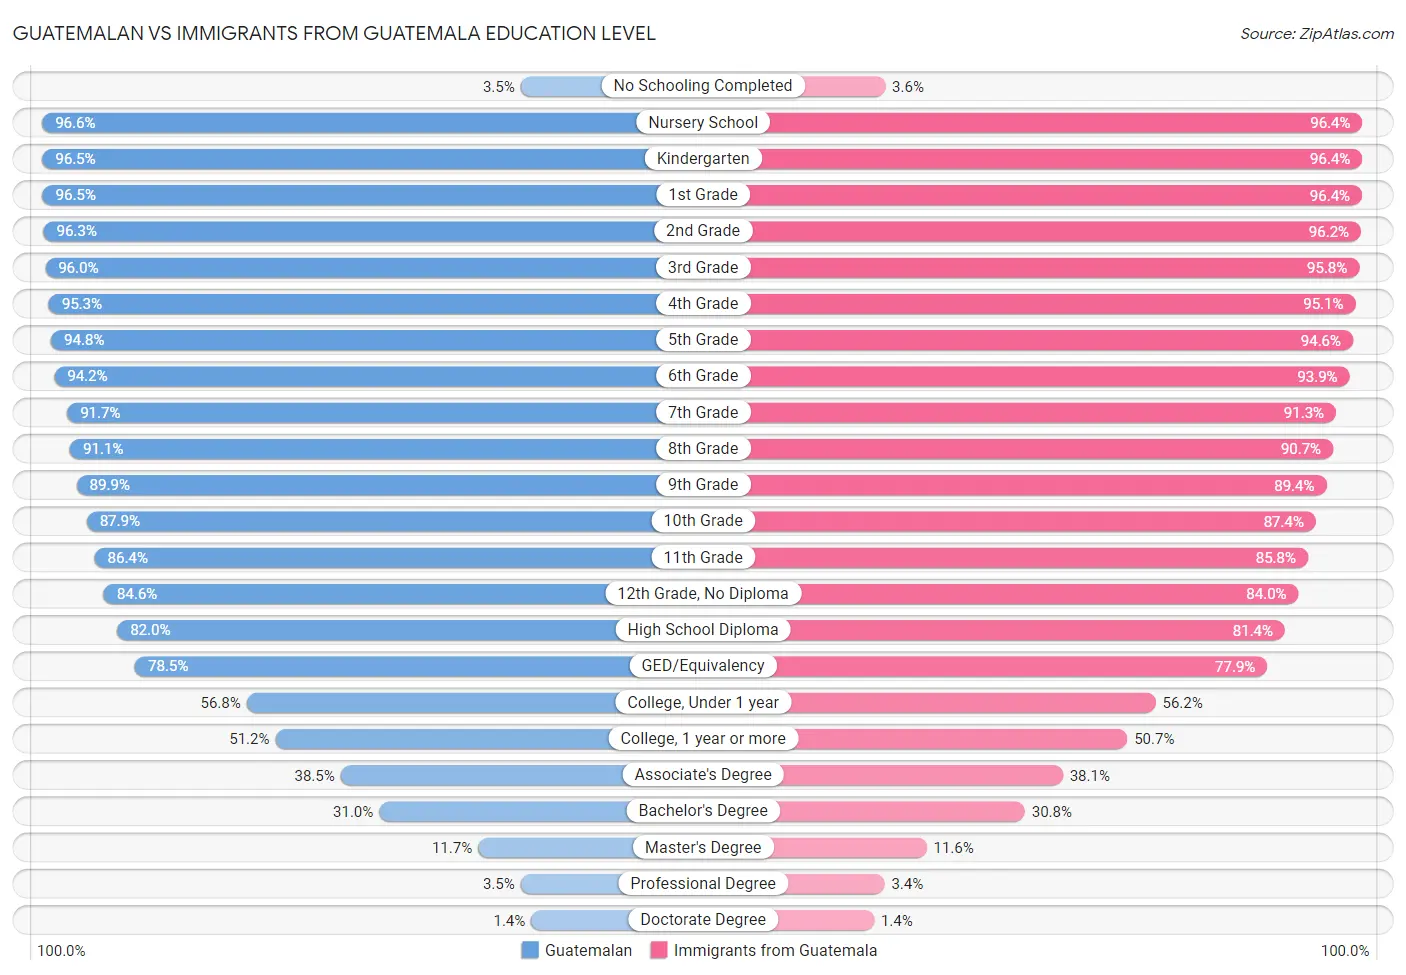 Guatemalan vs Immigrants from Guatemala Education Level